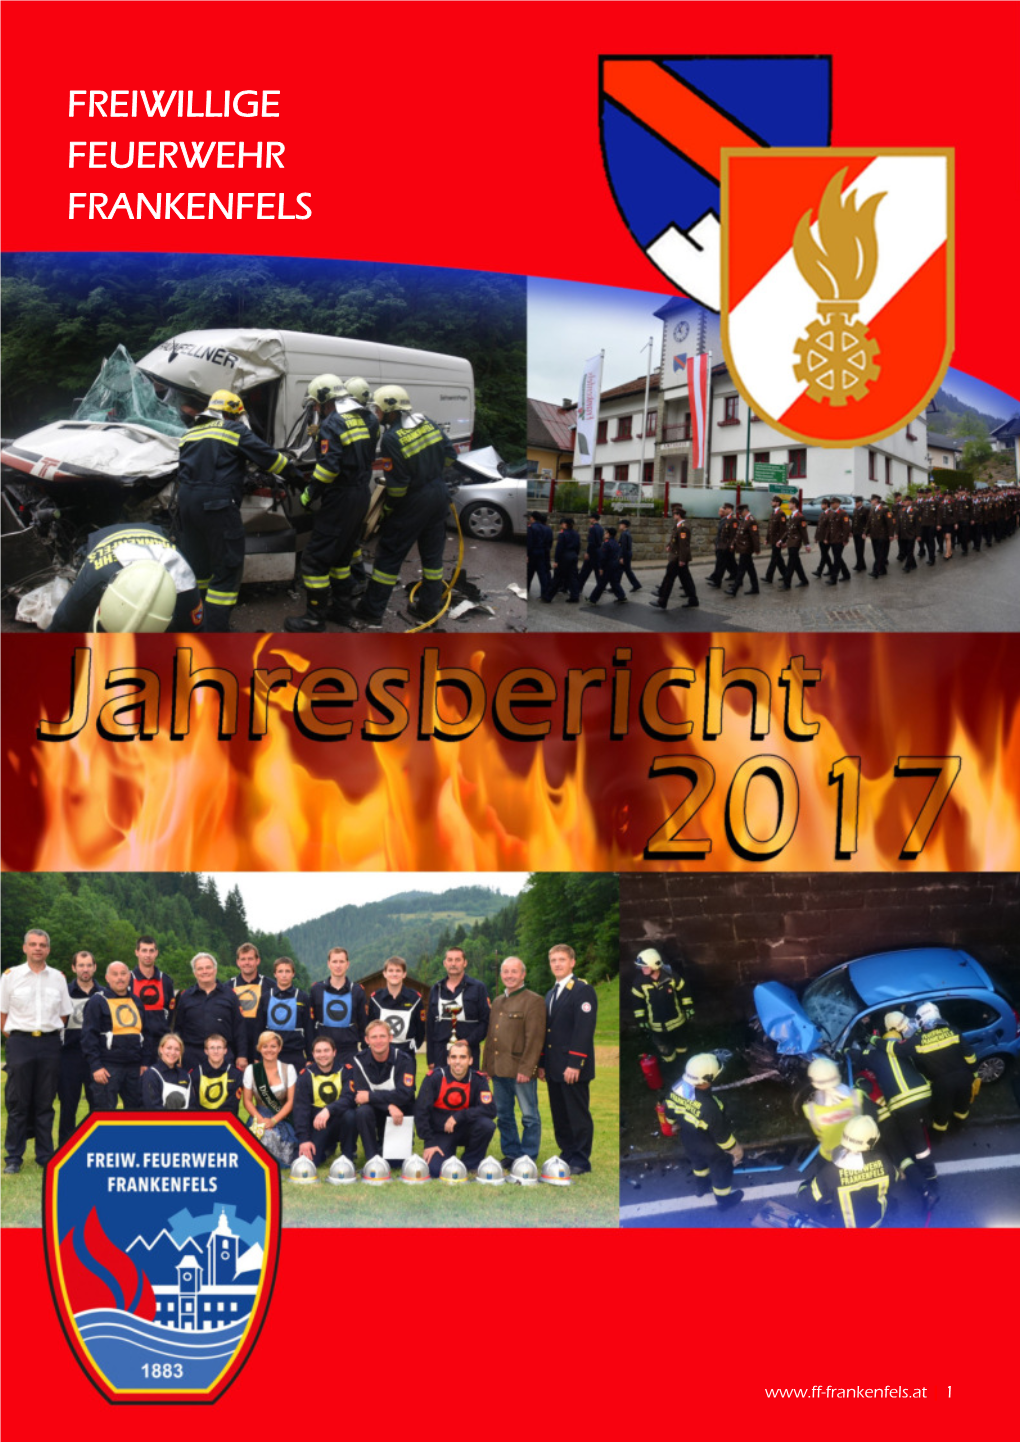 Freiwillige Feuerwehr Frankenfels